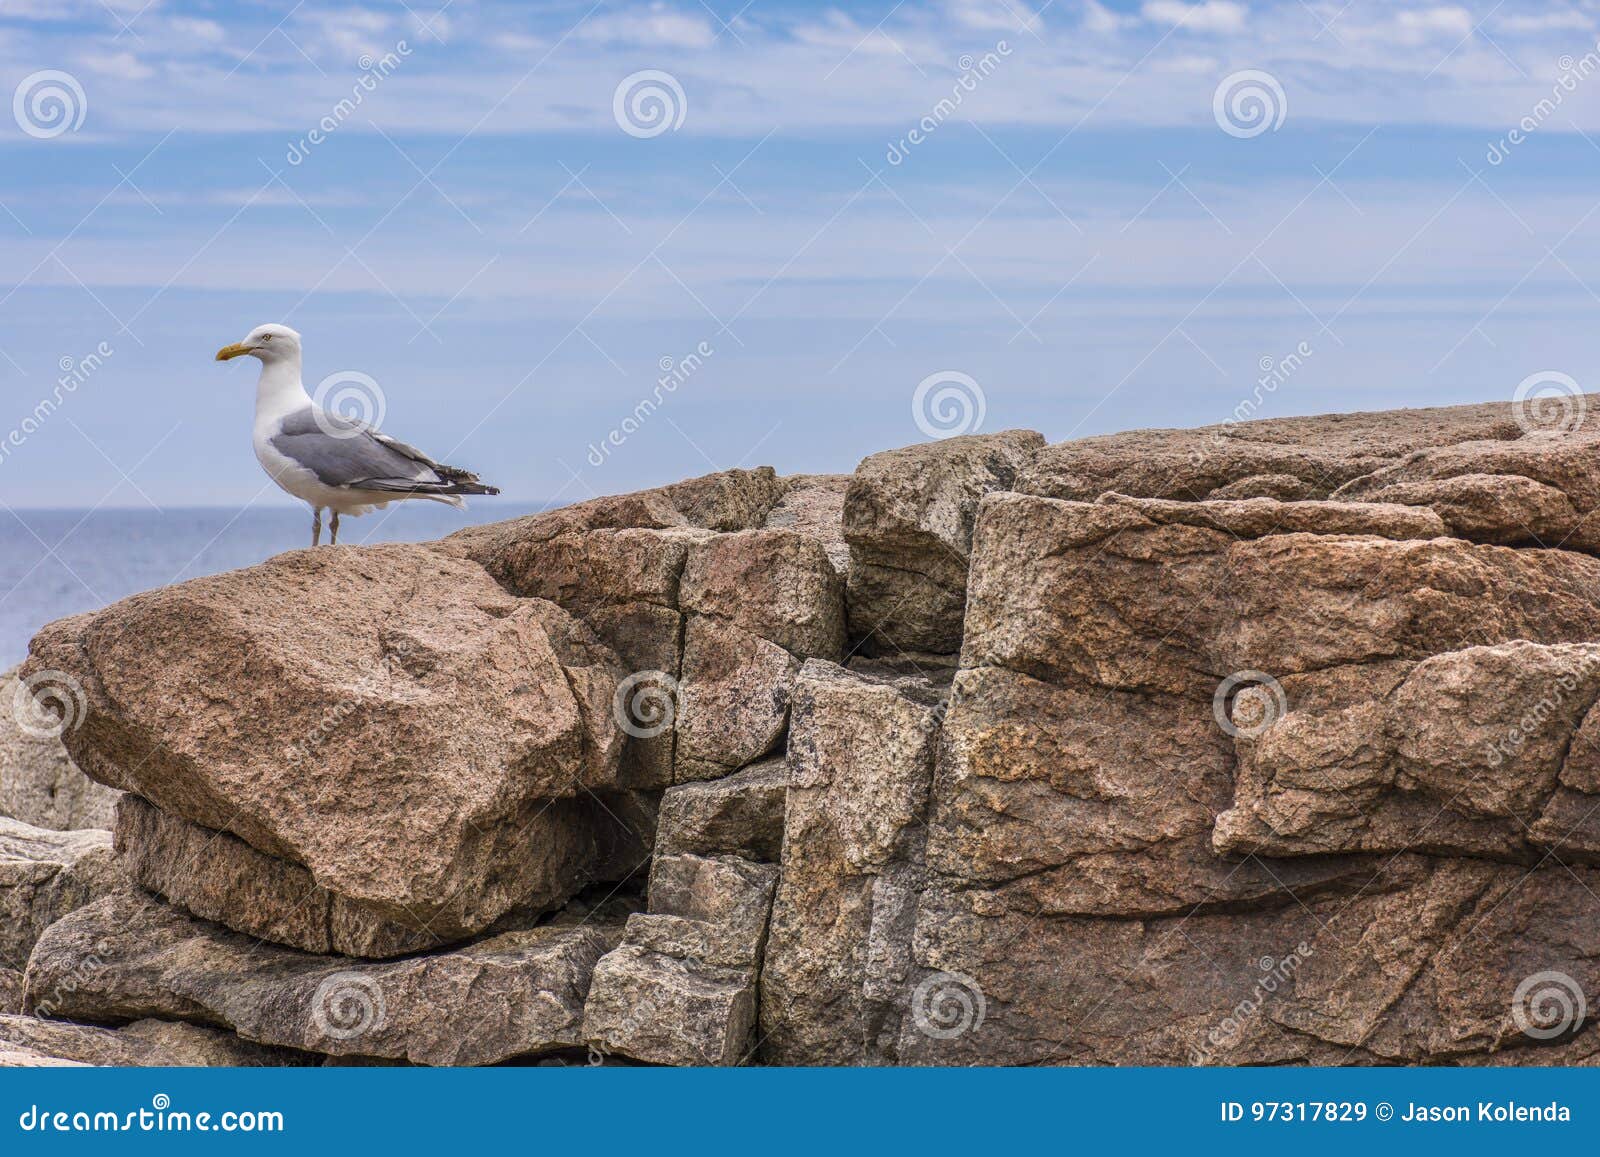 seagull on rocky ledge